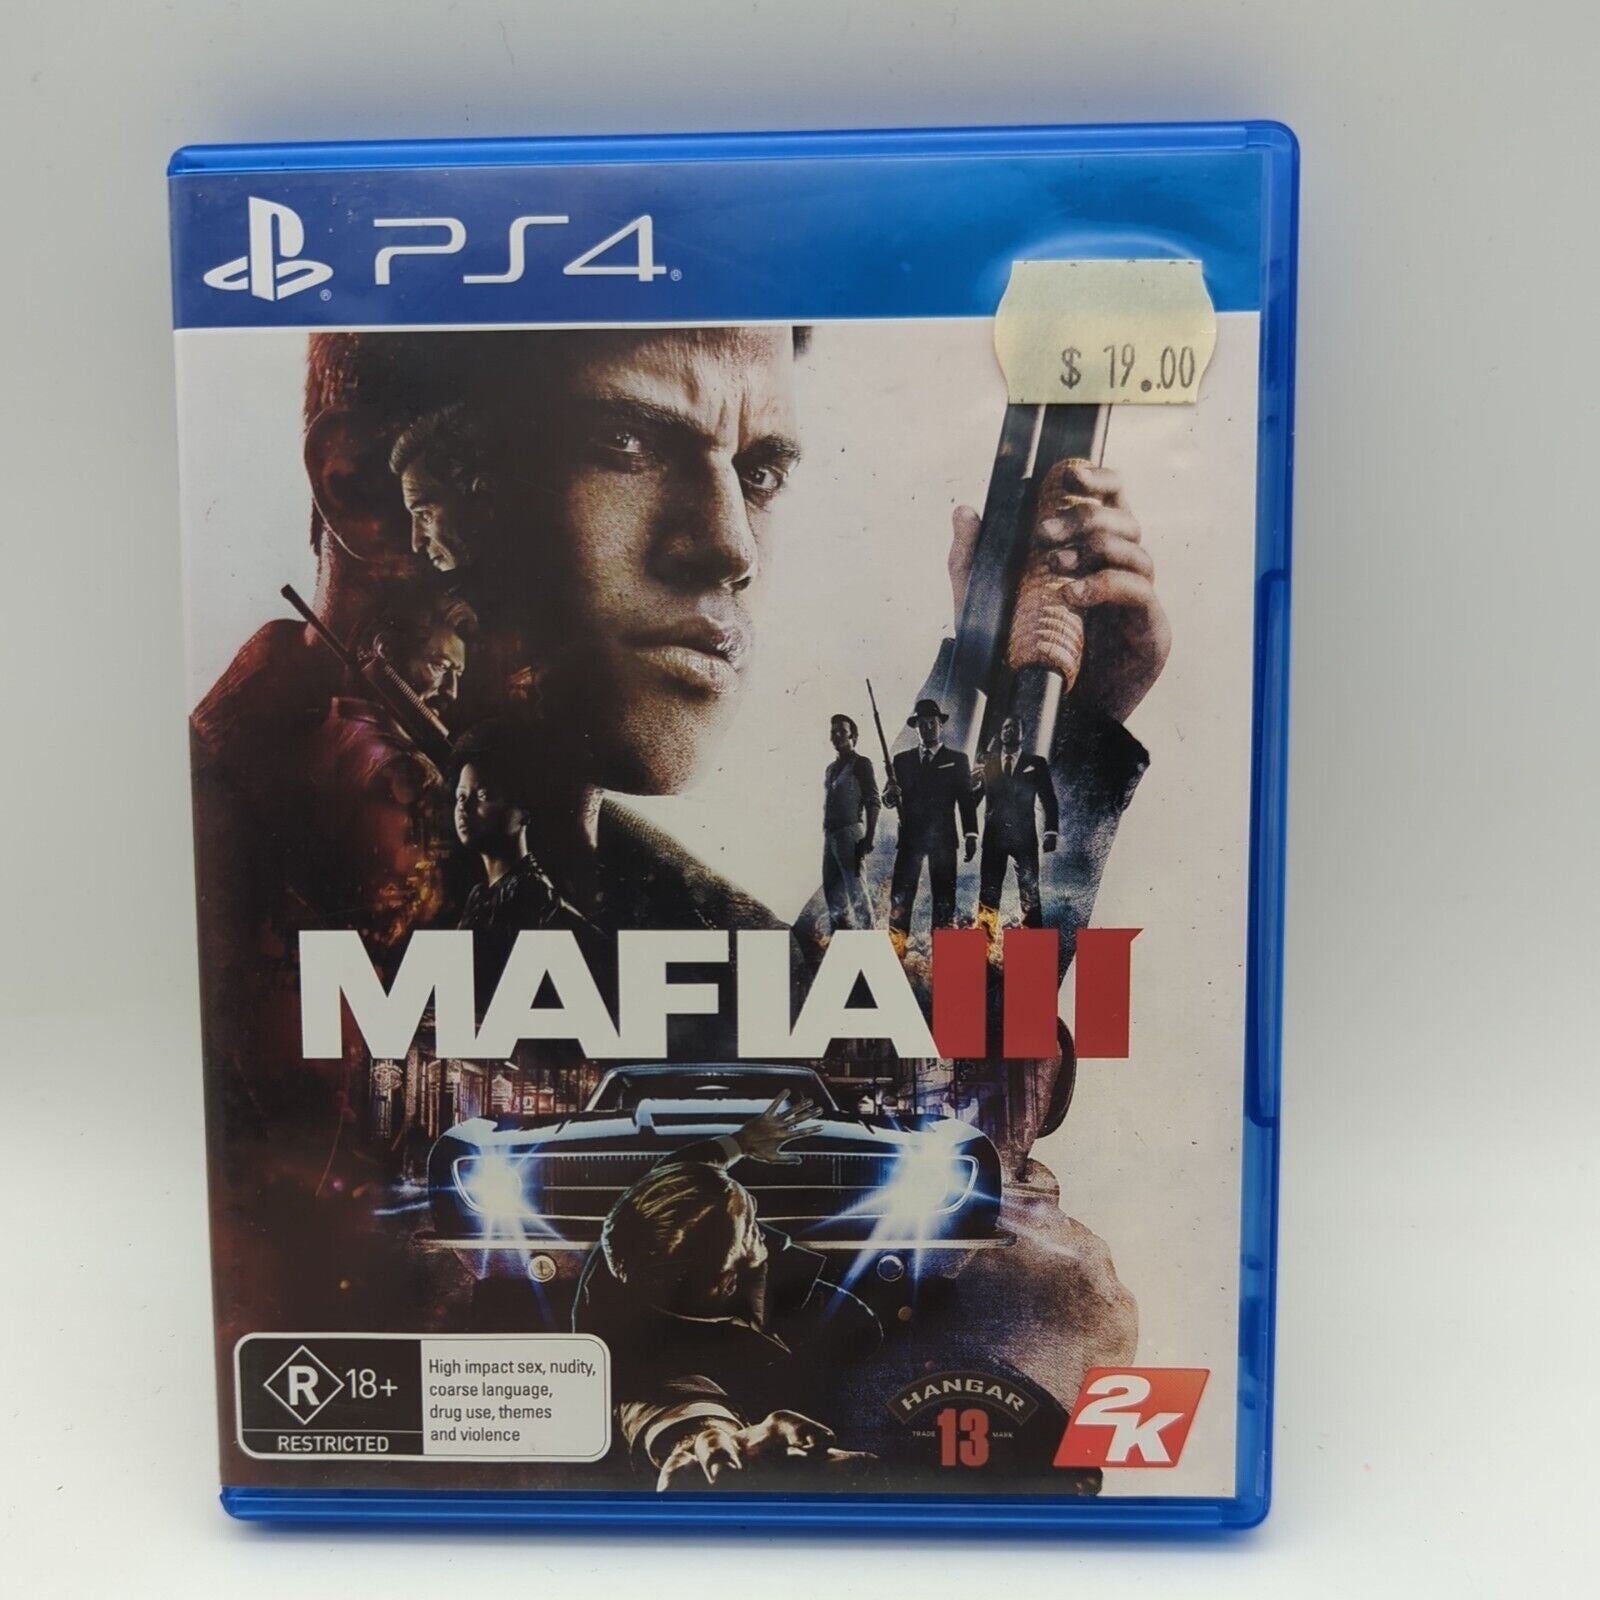 Mafia III 3 (Sony PlayStation 4 PS4) Game R18+